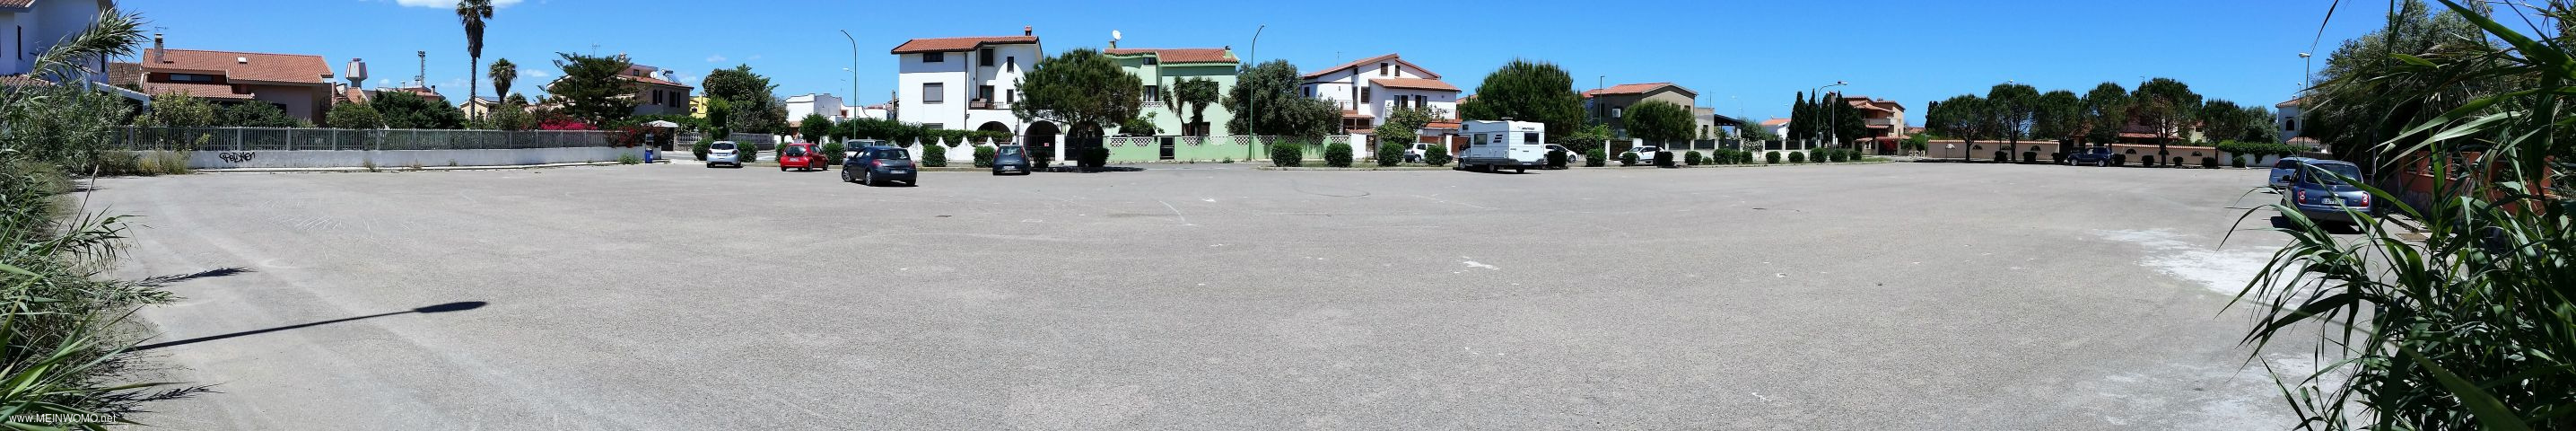  Large parking near the beach.